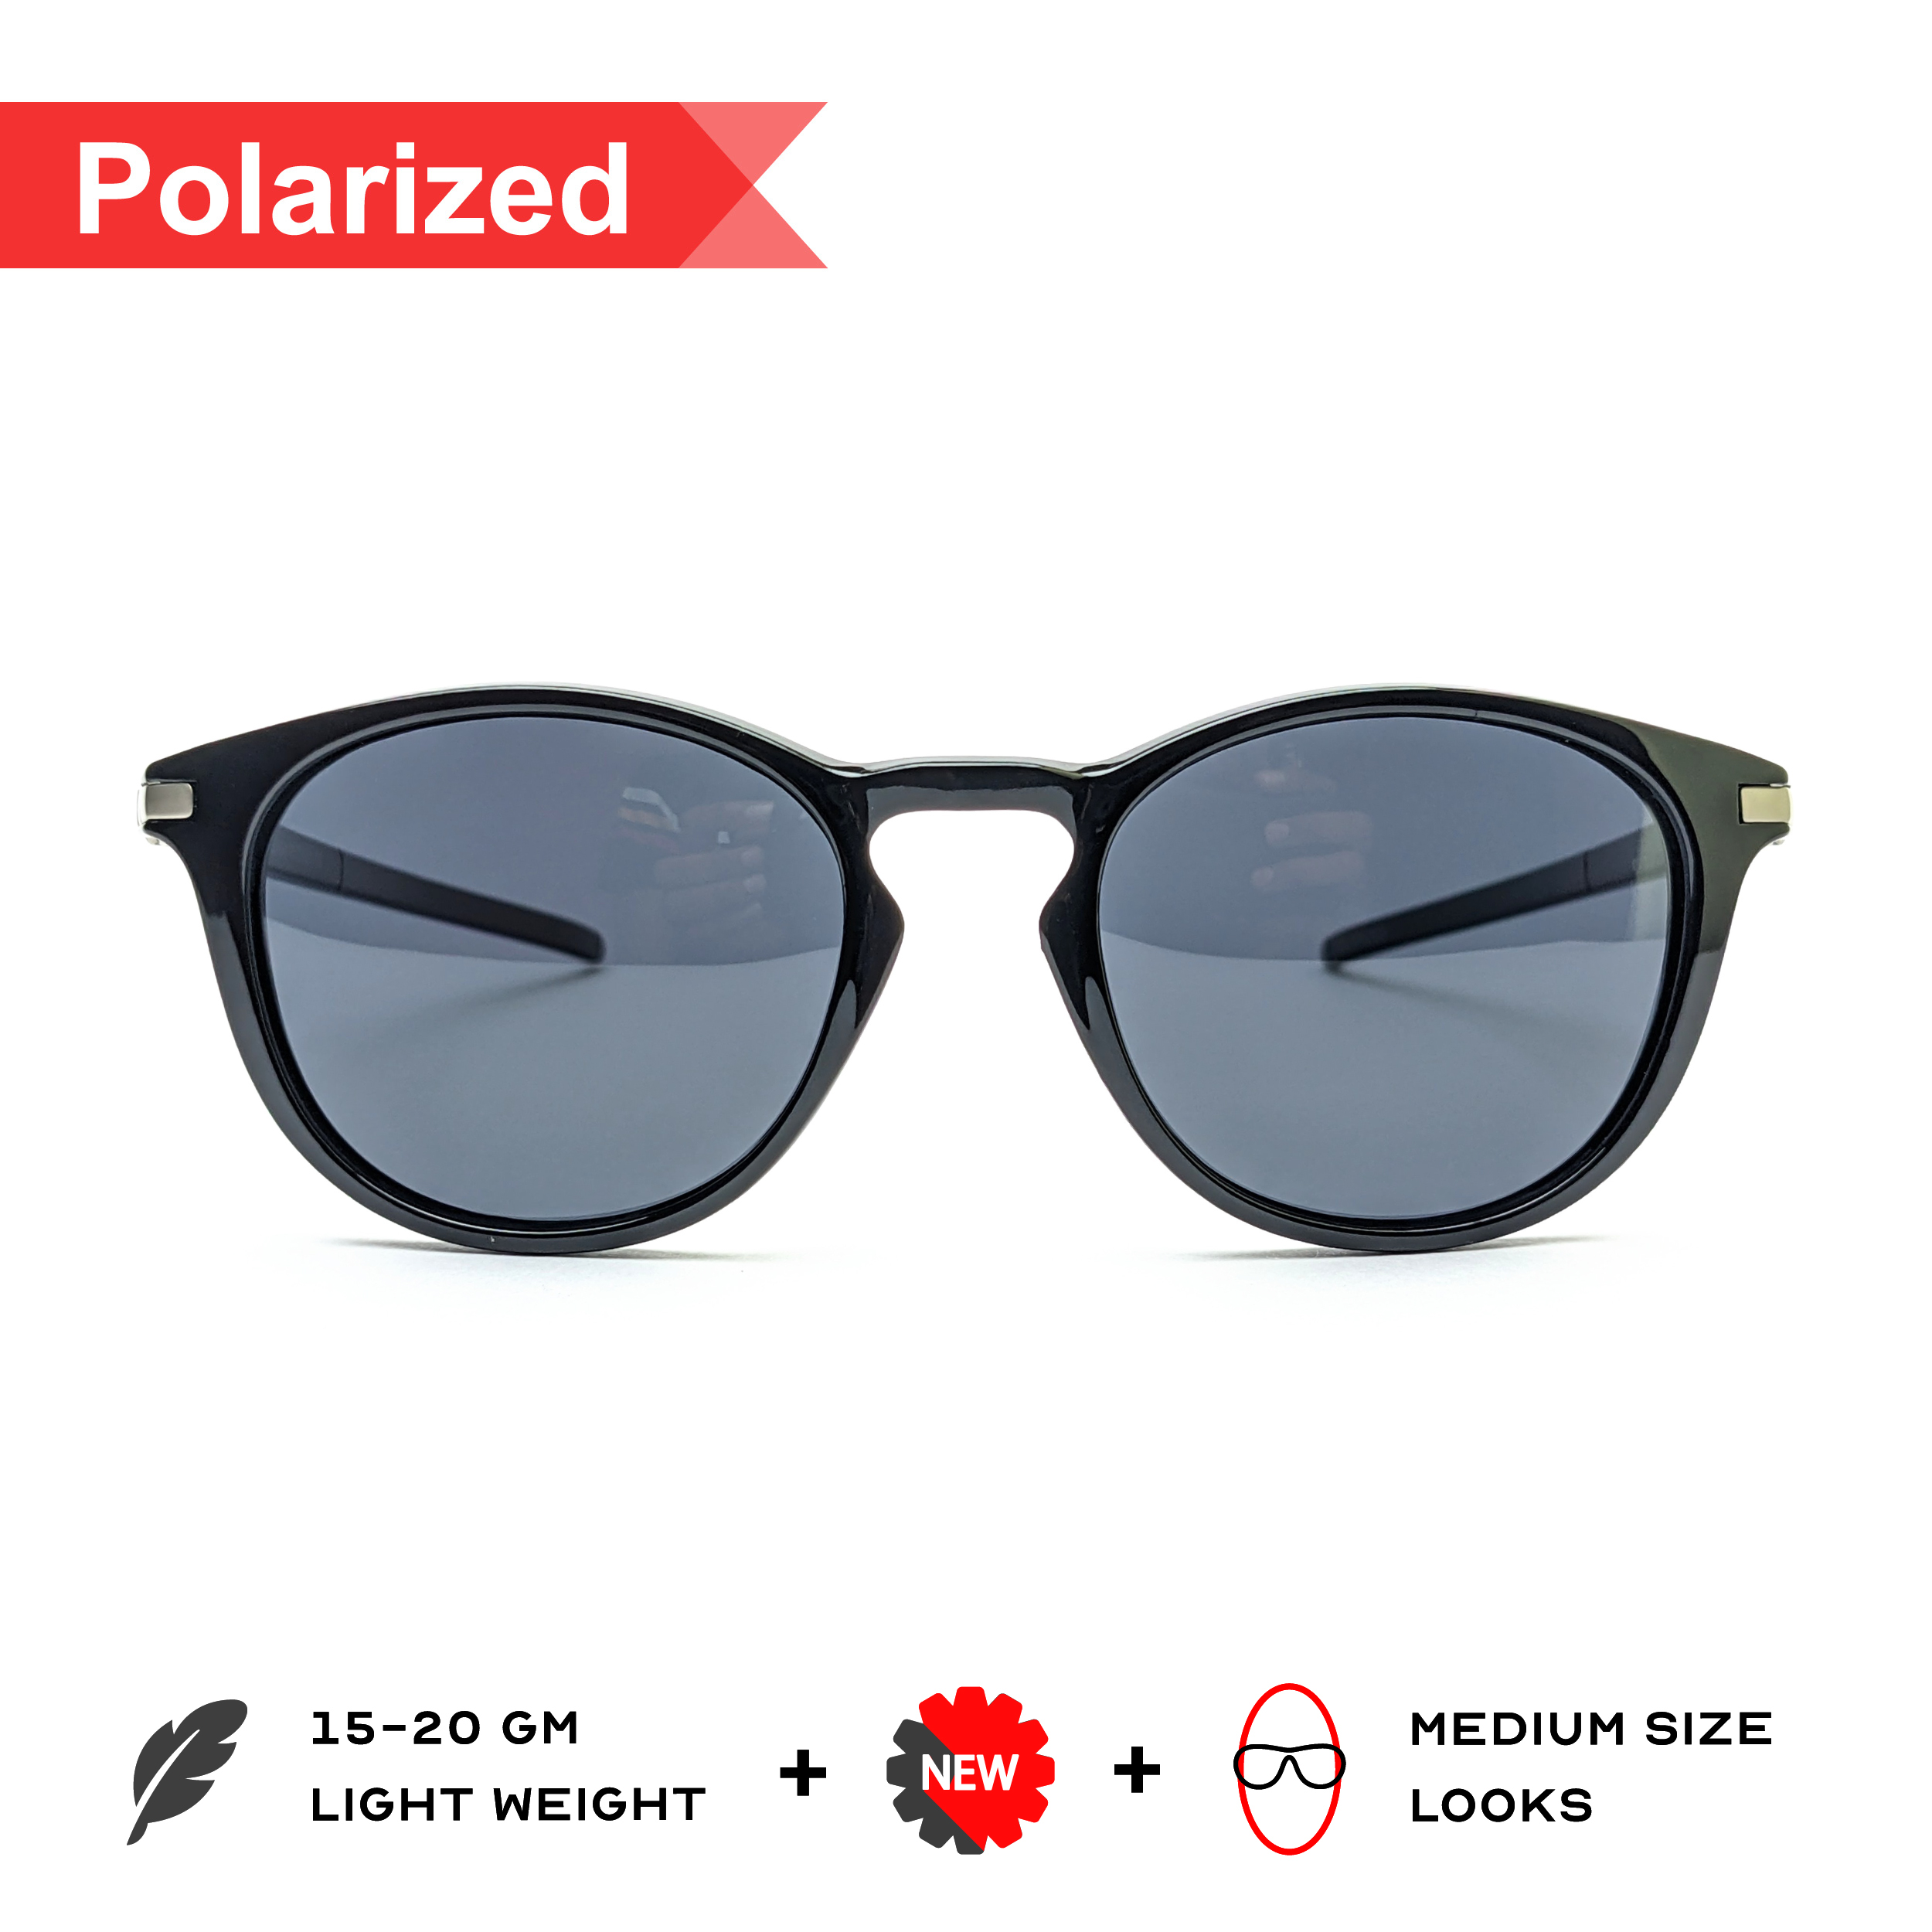 Black - Glossy Finish - Polarized Sunglasses for Men & Women – 100